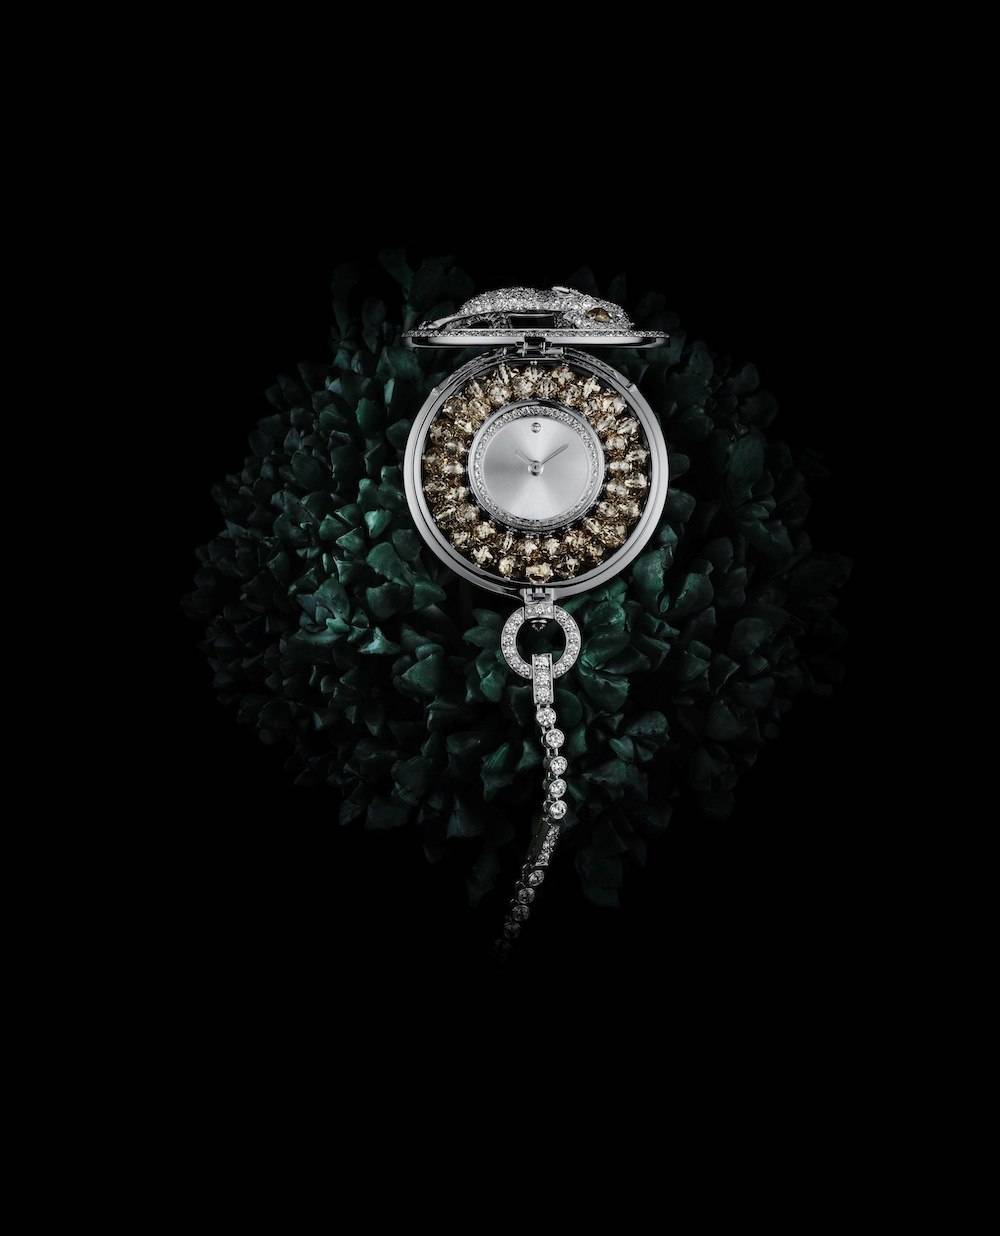 Haute Watch of the Week: Cartier Les Heures Fabuleux Pocket Watch